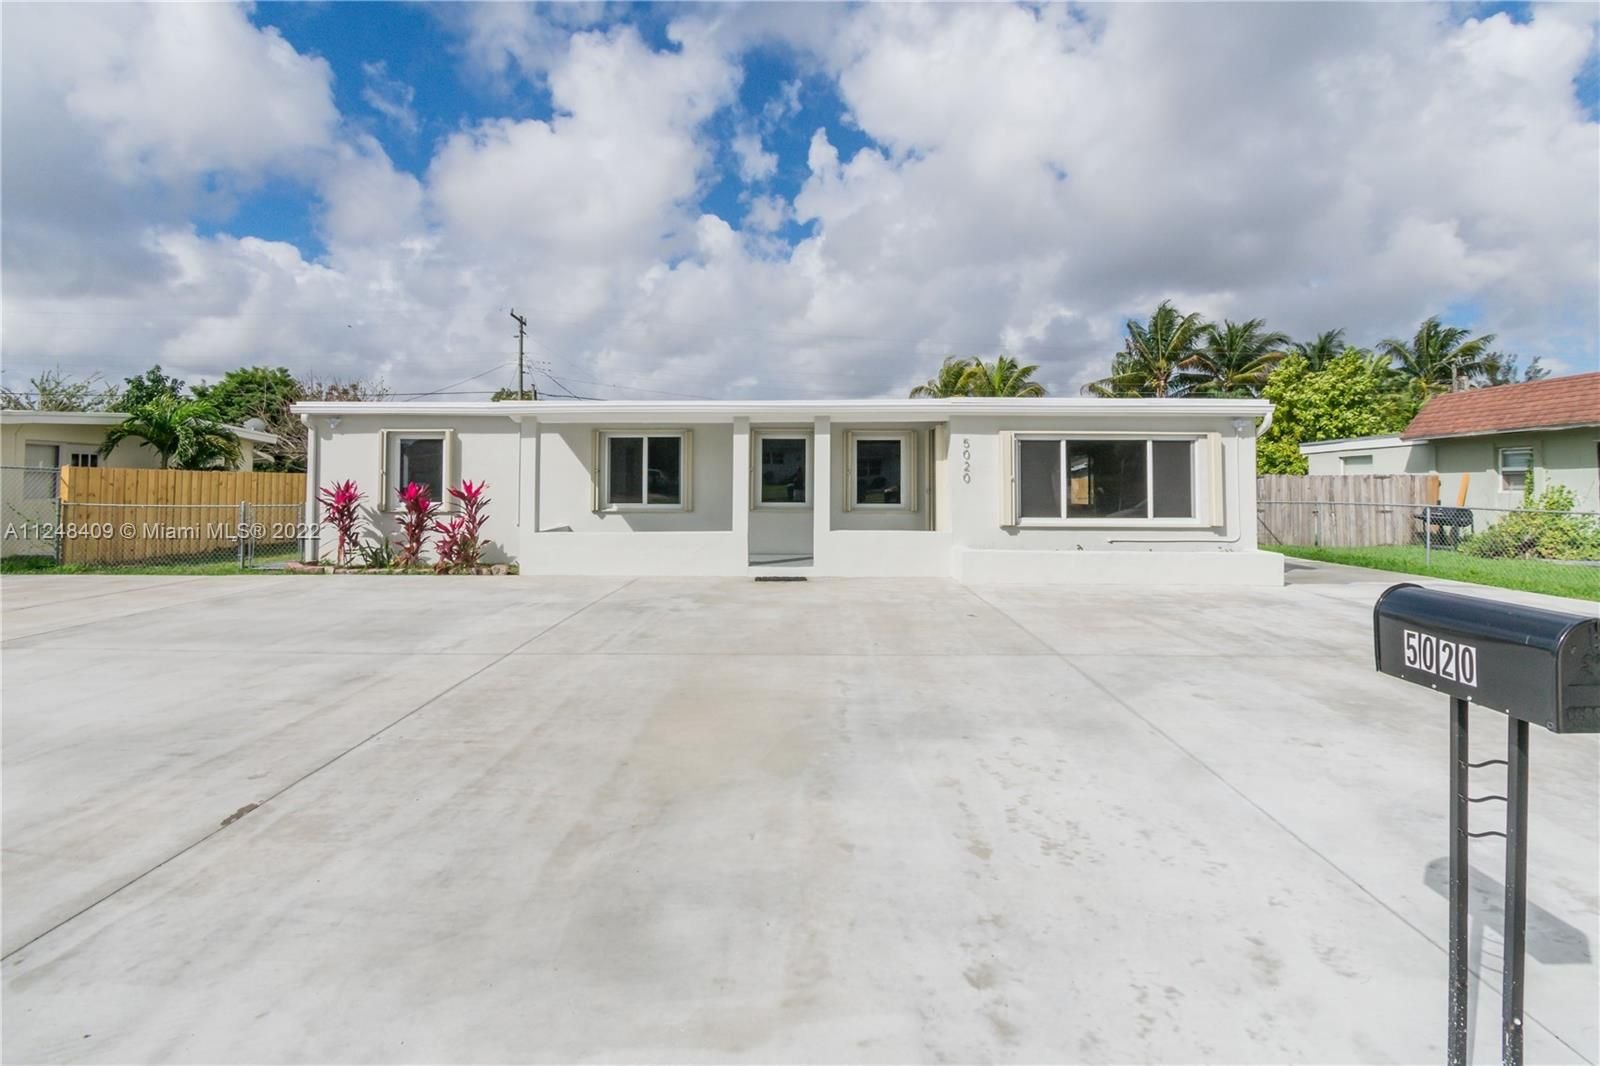 Real estate property located at 5020 97th Ave, Miami-Dade County, Miami, FL